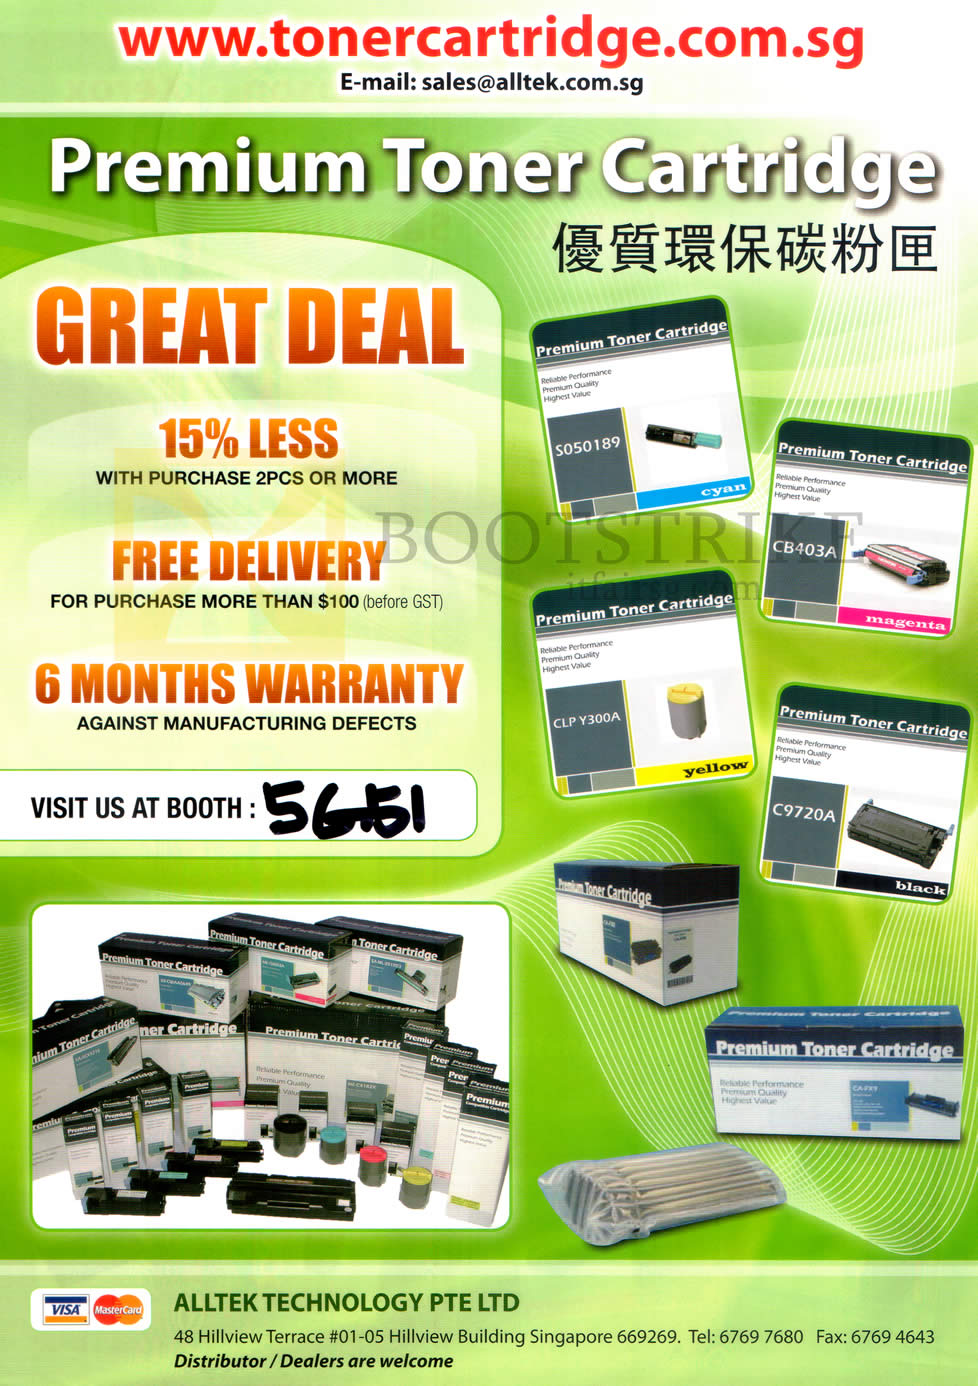 SITEX 2013 price list image brochure of Alltek Toner Cartridge, Warranty, Free Delivery